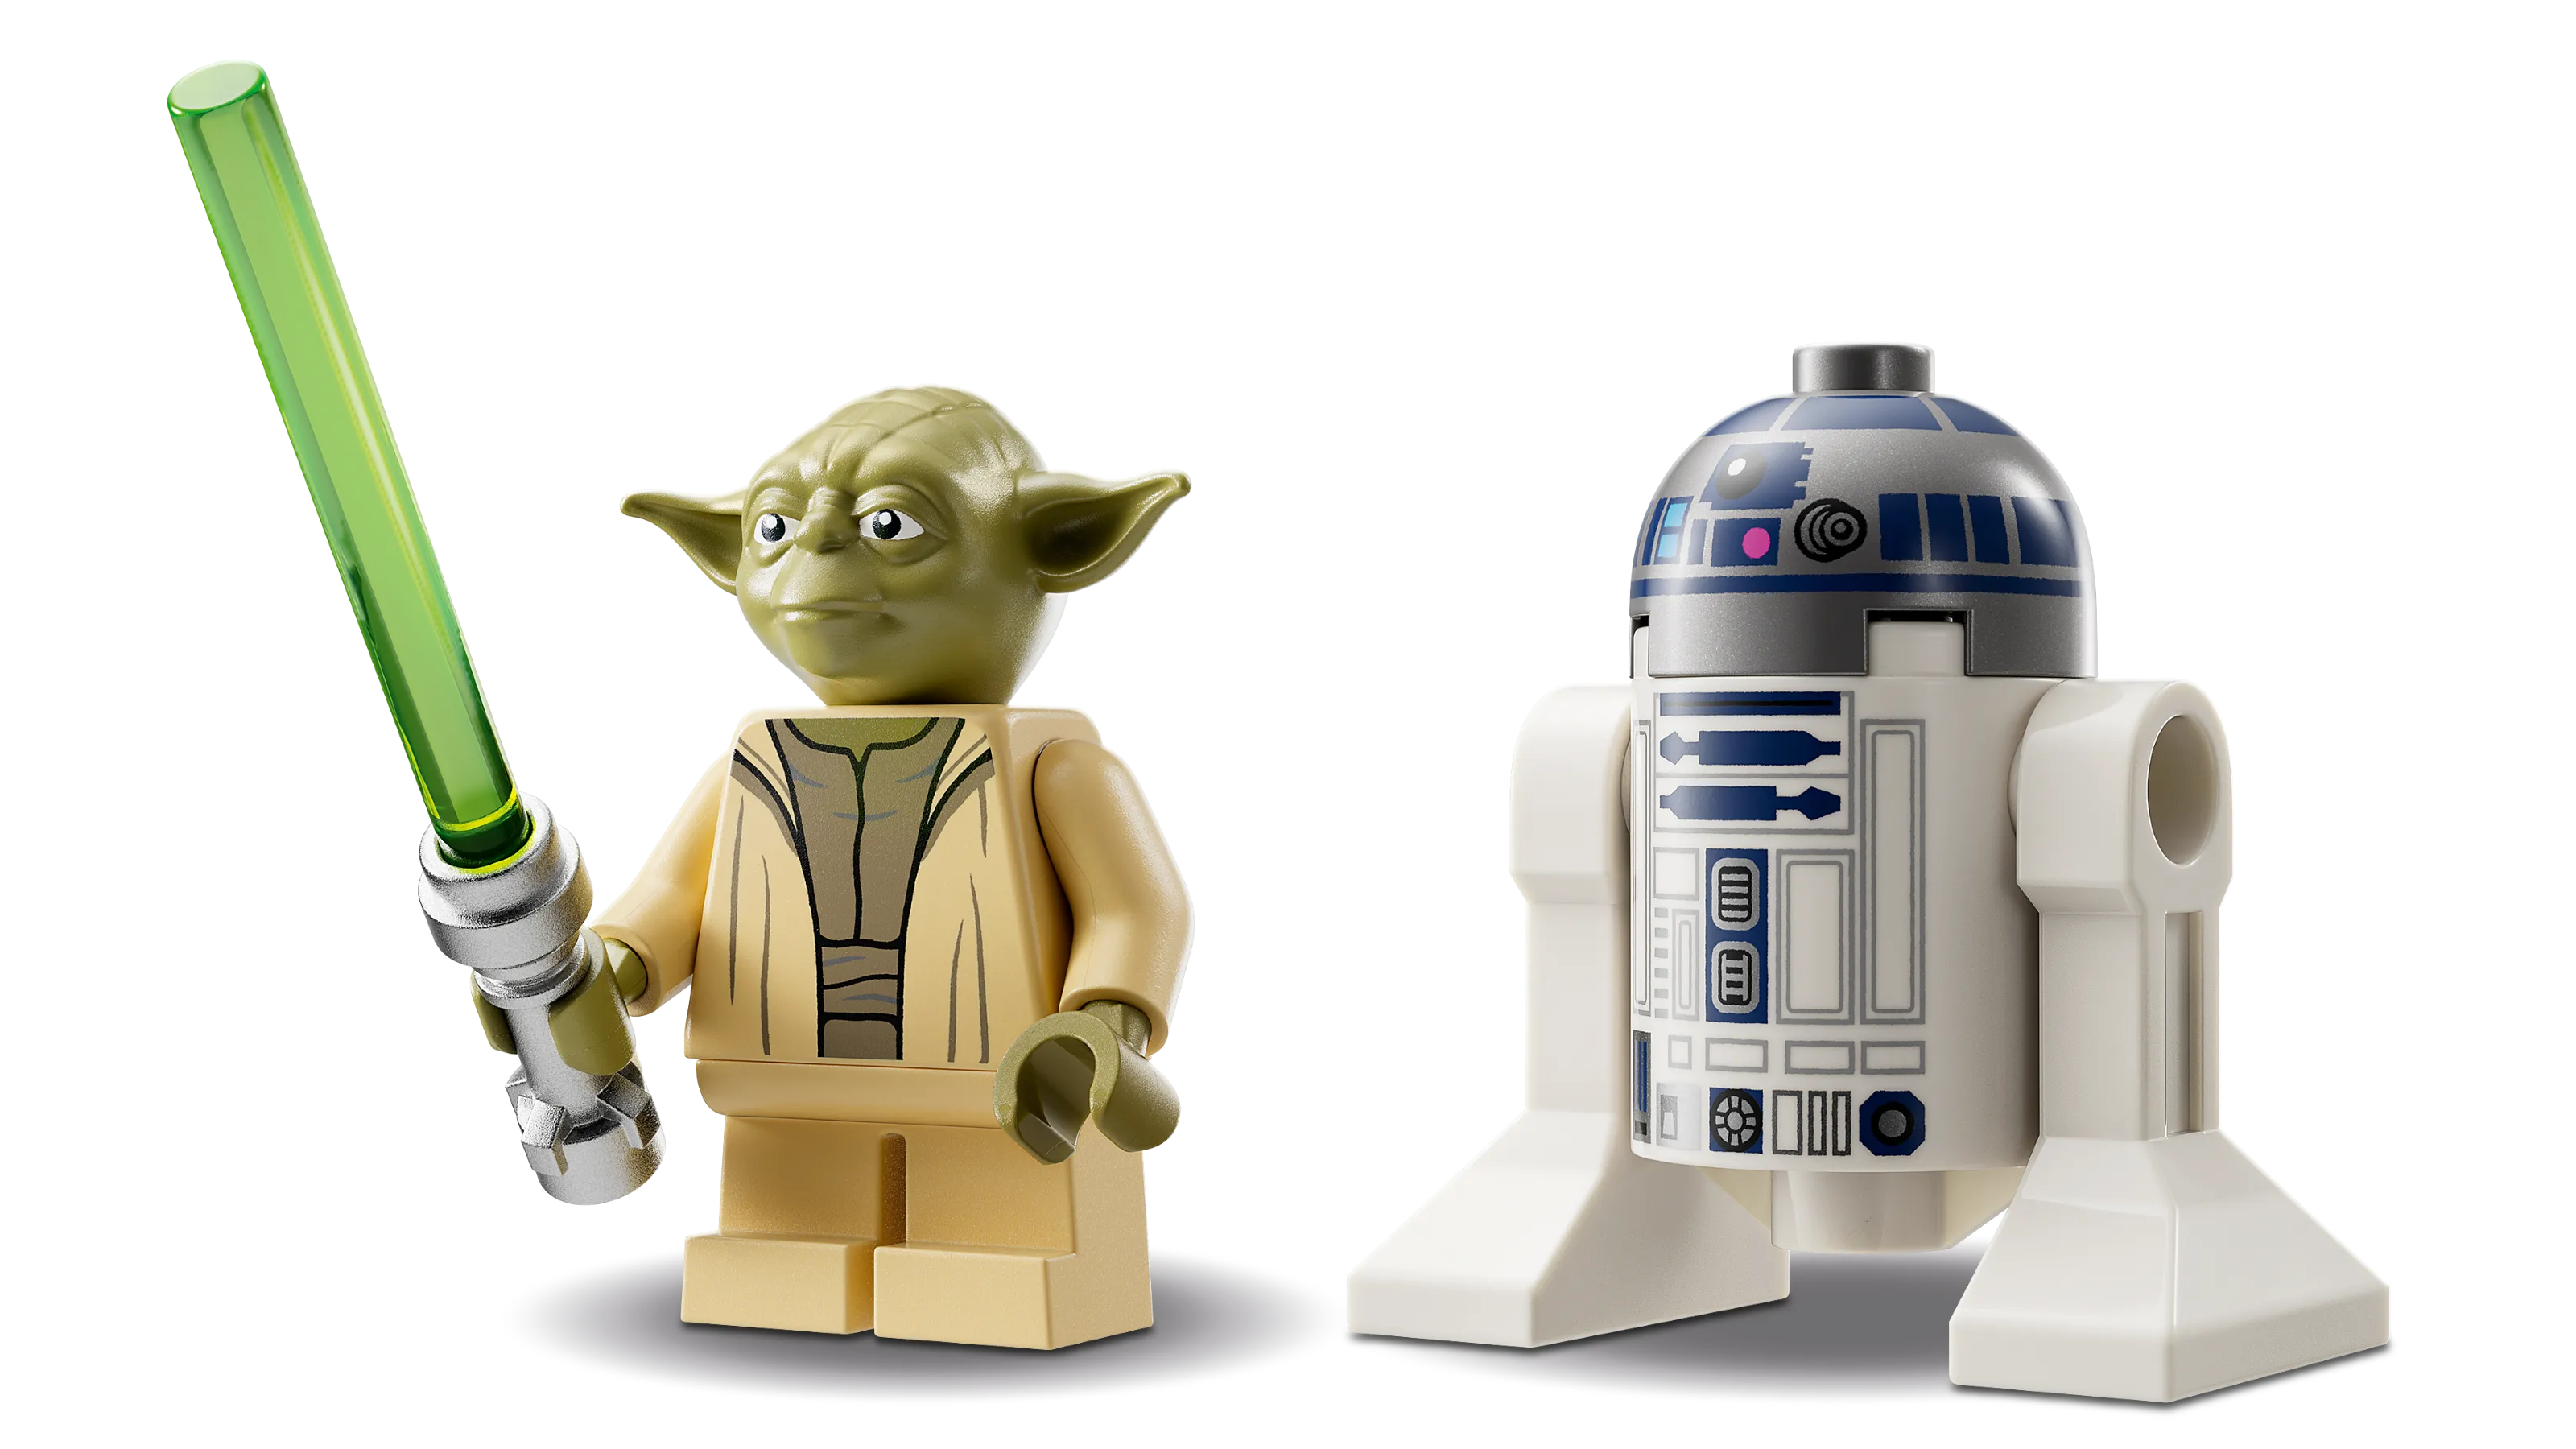  LEGO Star Wars Minifigure Combo Pack - R2-D2 Astromech